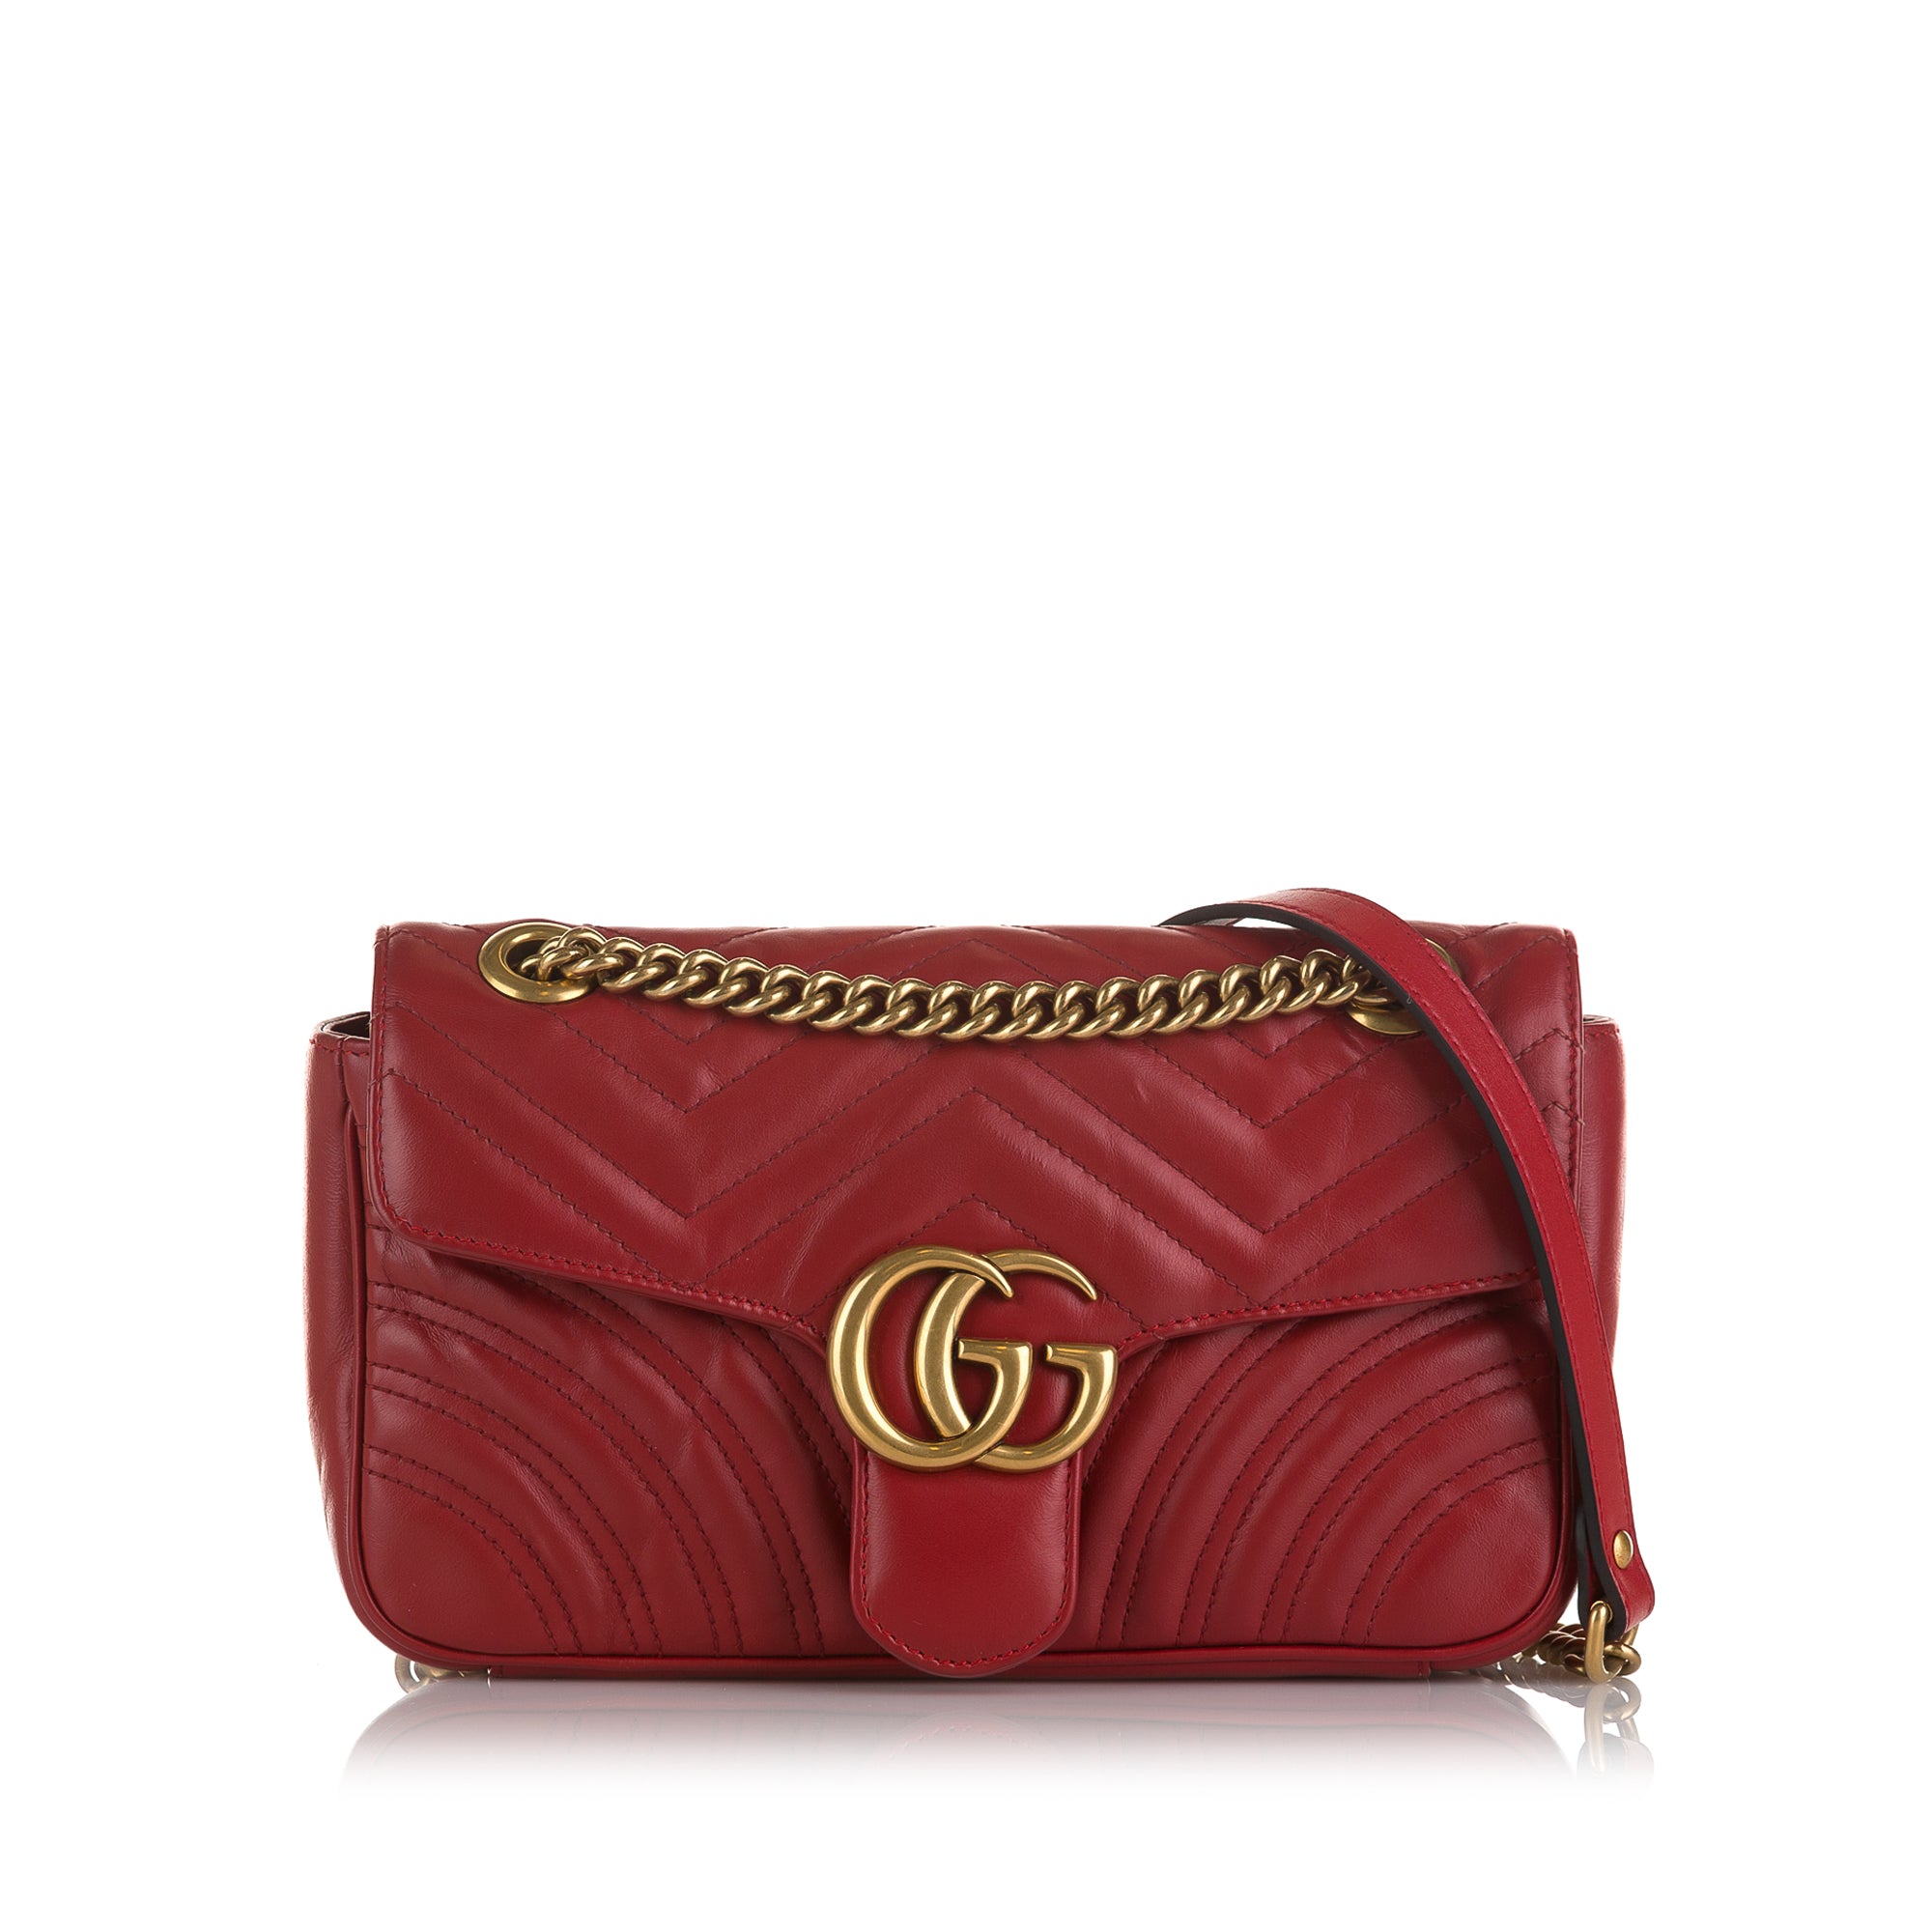 GUCCI Pre-Loved Medium GG Marmont Matelassé Velvet Shoulder Bag